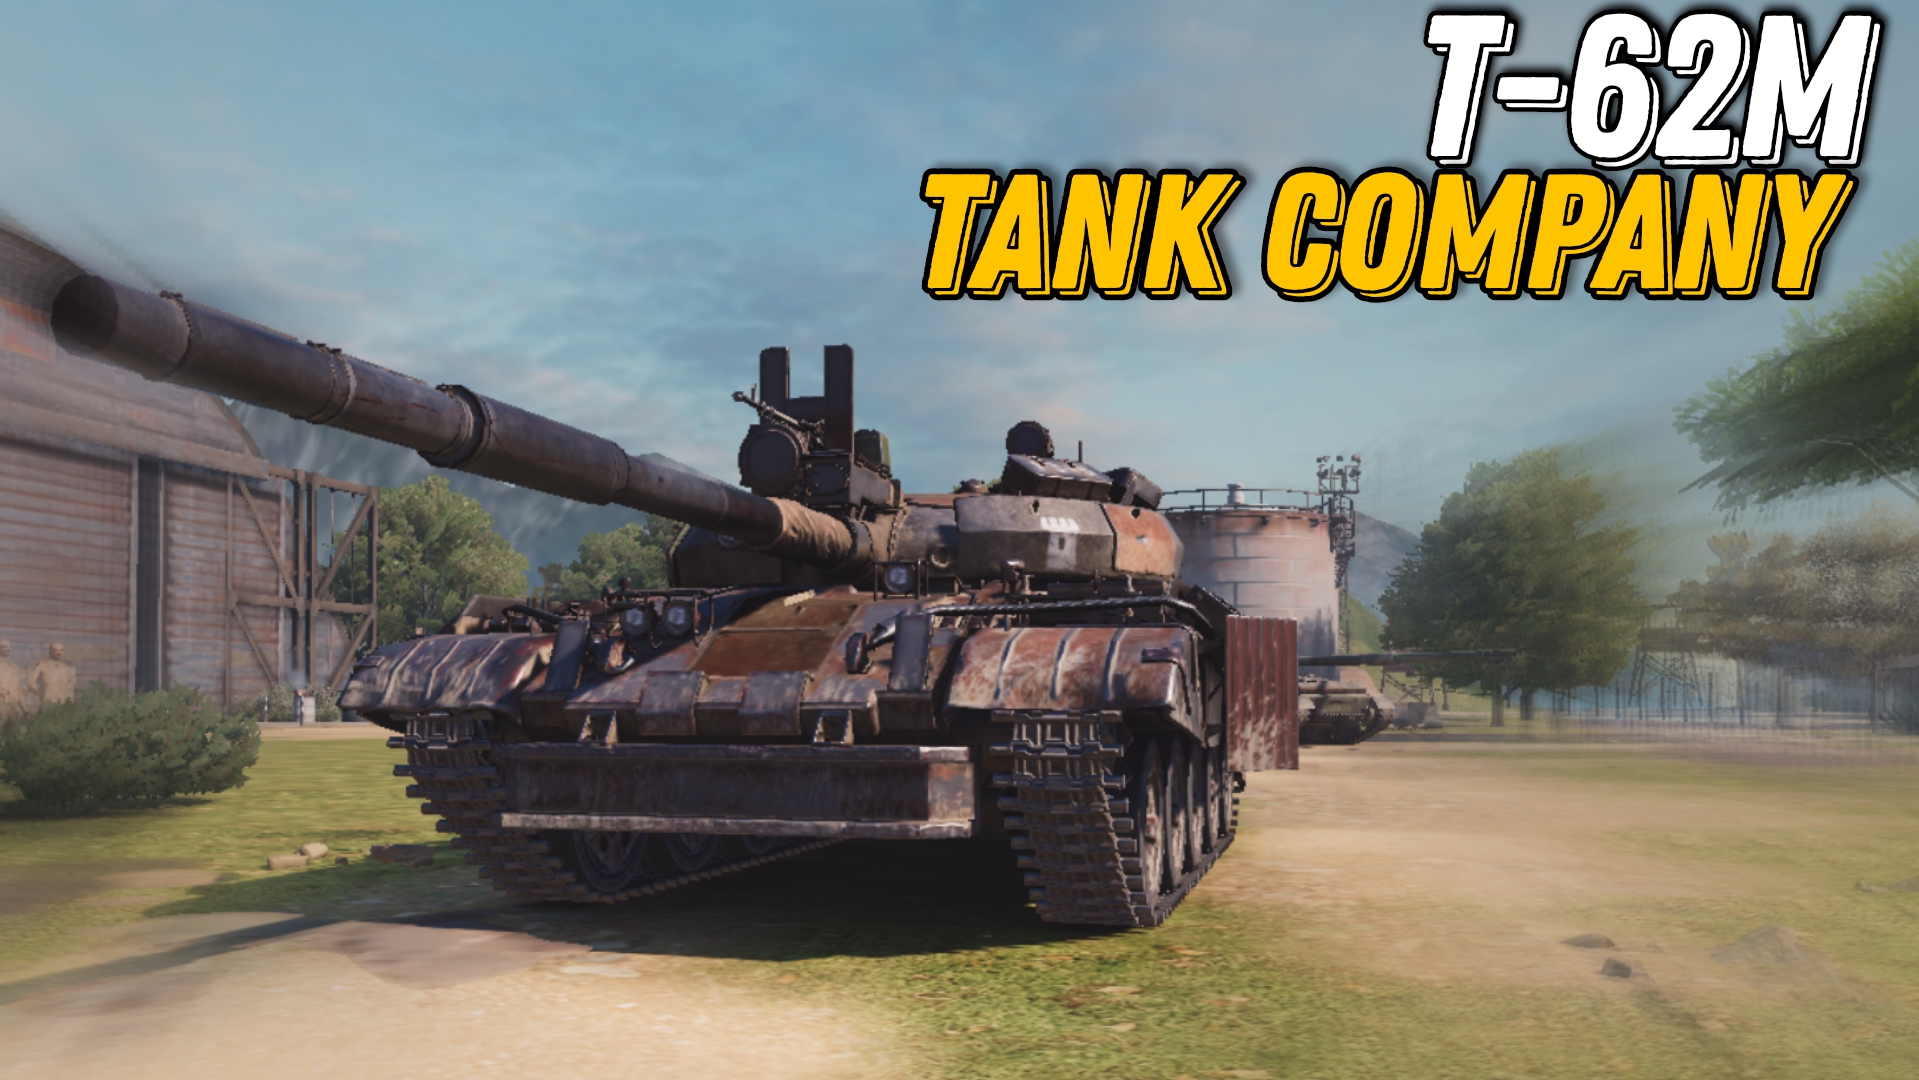 Танк компании игра. Танк Компани мобайл. Tank Company mobile WZ 132. Tank Company wz121d. Танк Компани ультра Графика.